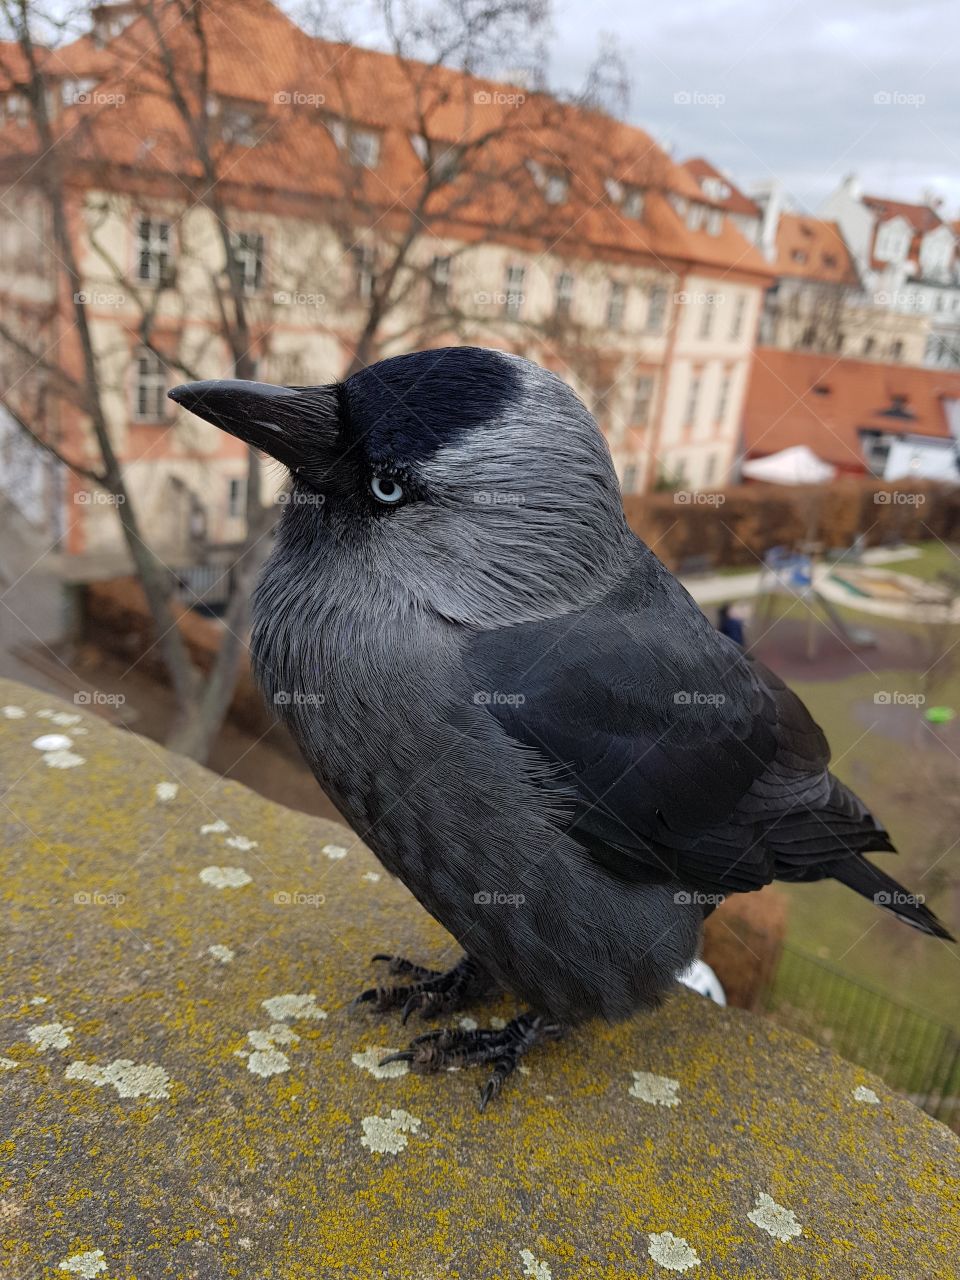 Just a pretty bird on a Charles Bridge in Prague